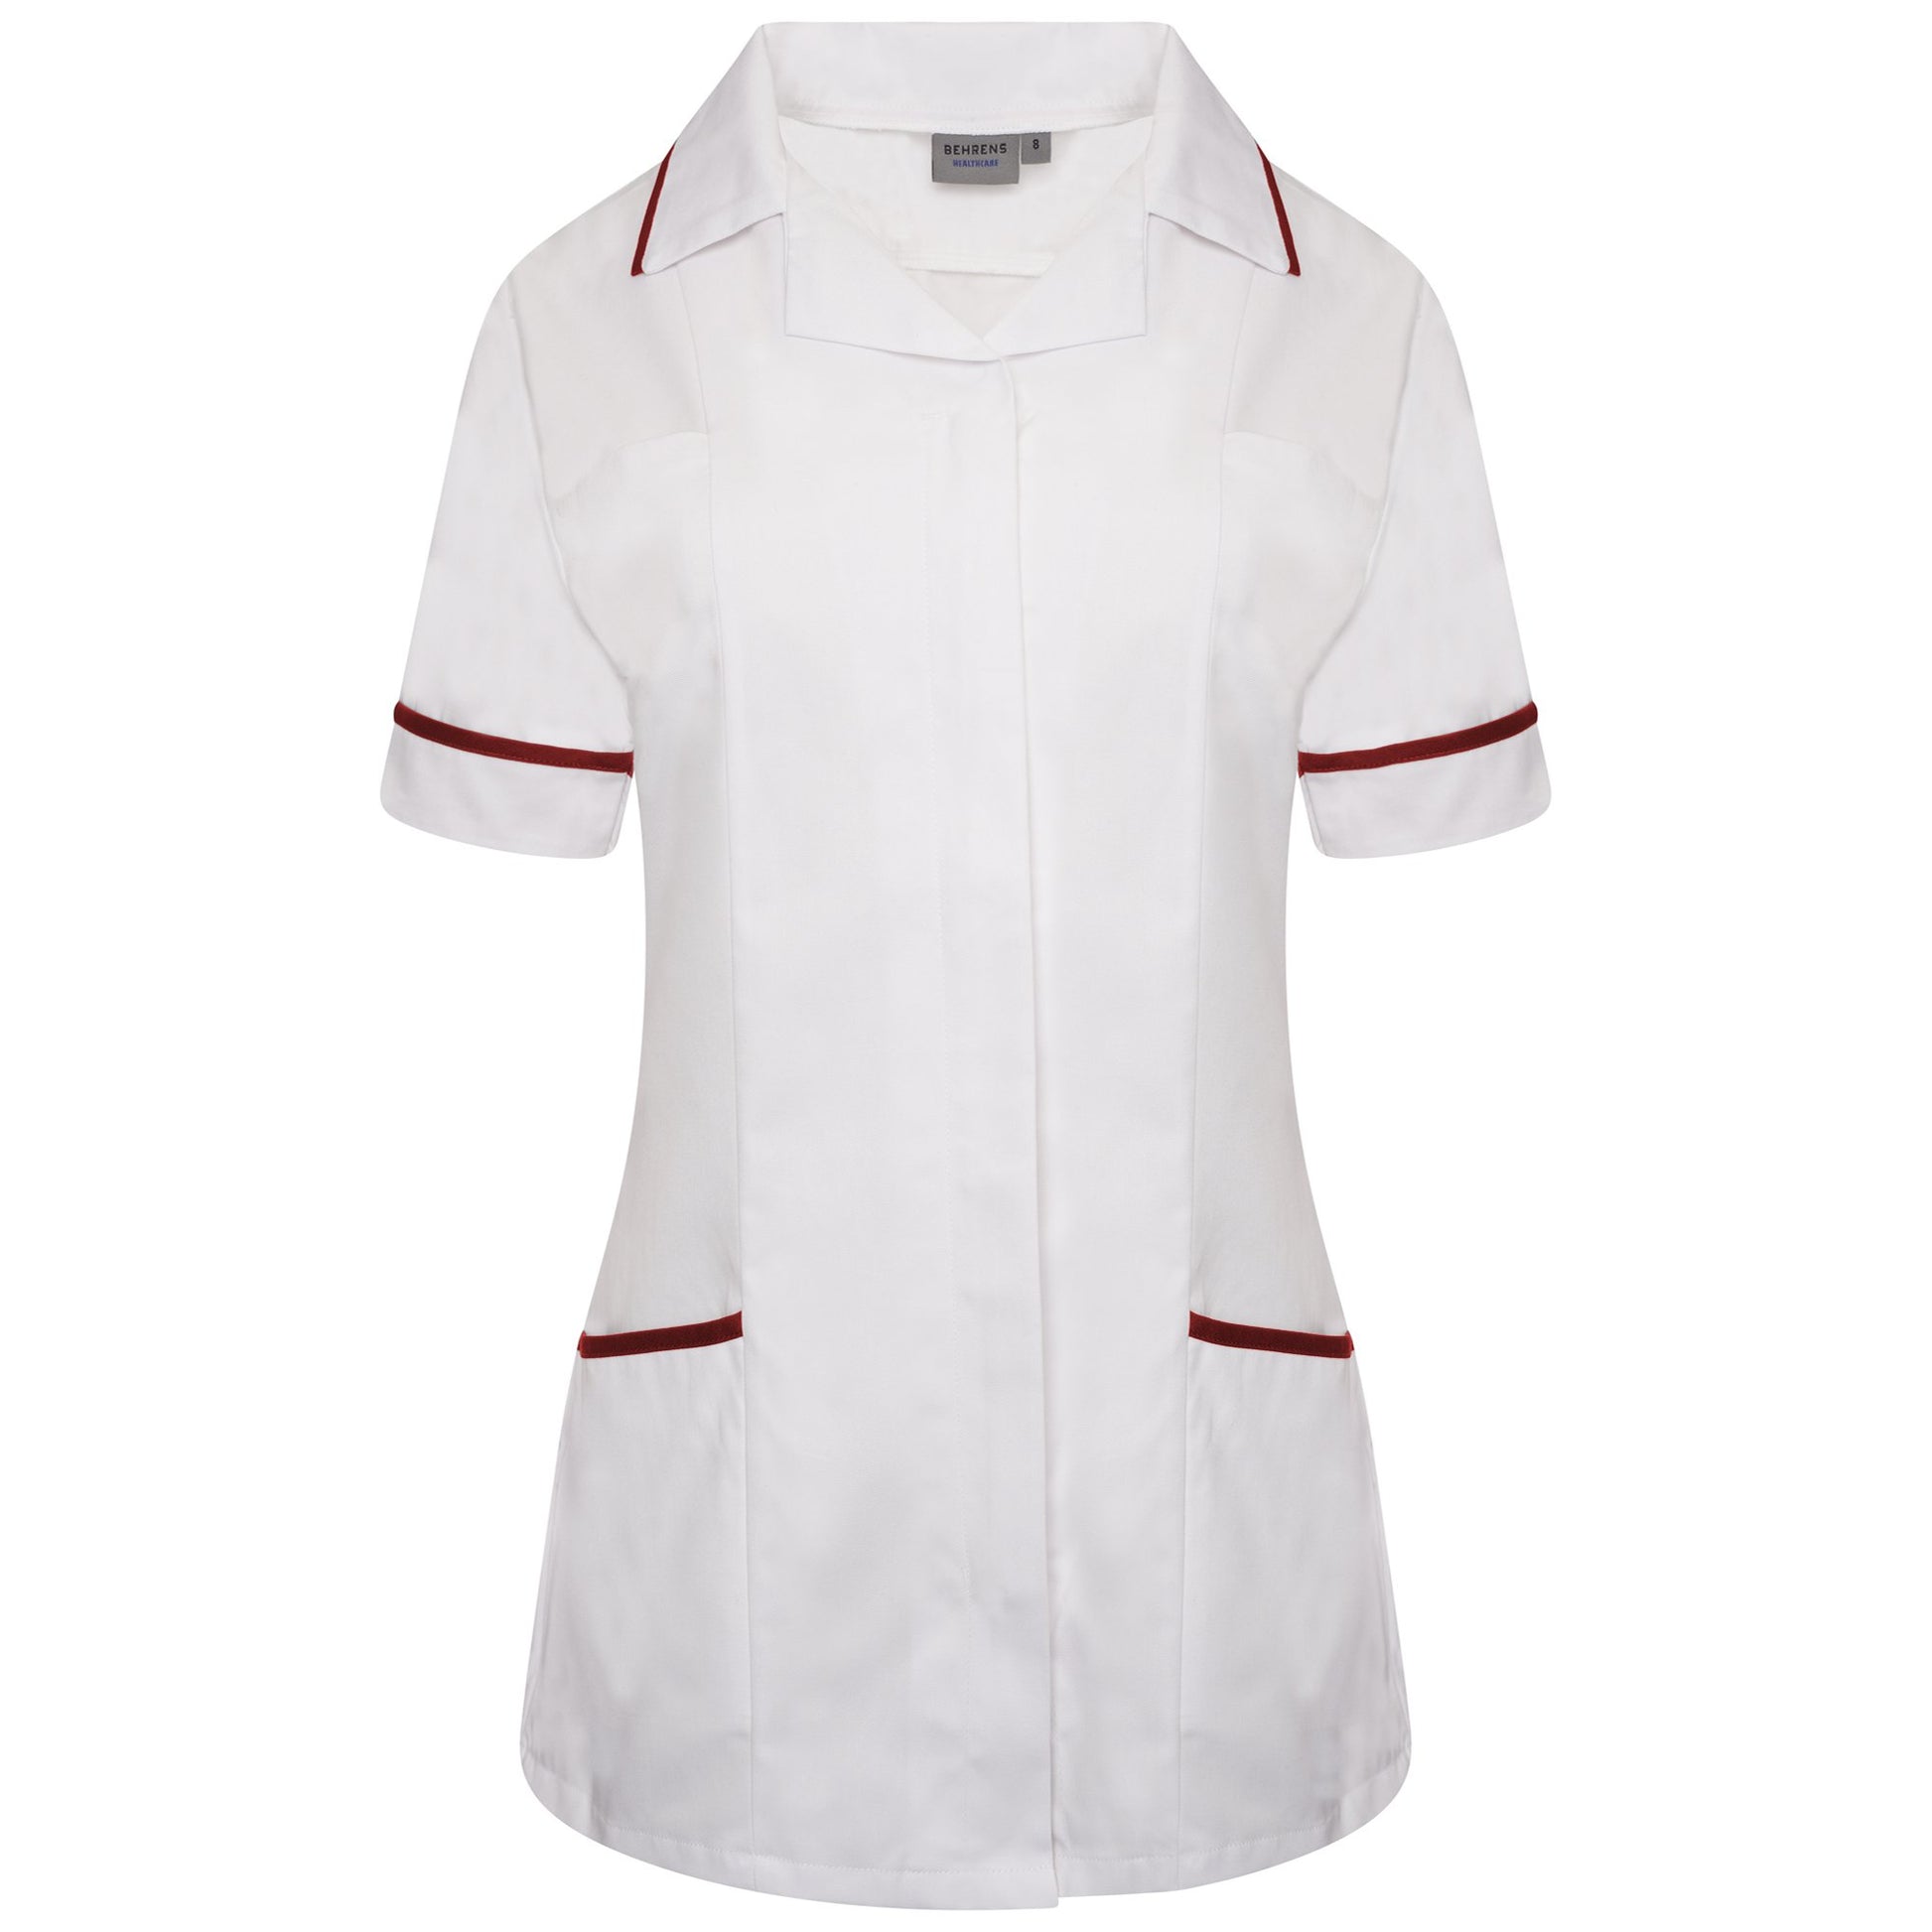 Behrens Ladies Revere Nurses Tunic - NCLTPSR - White/Maroon Trim - UK 8